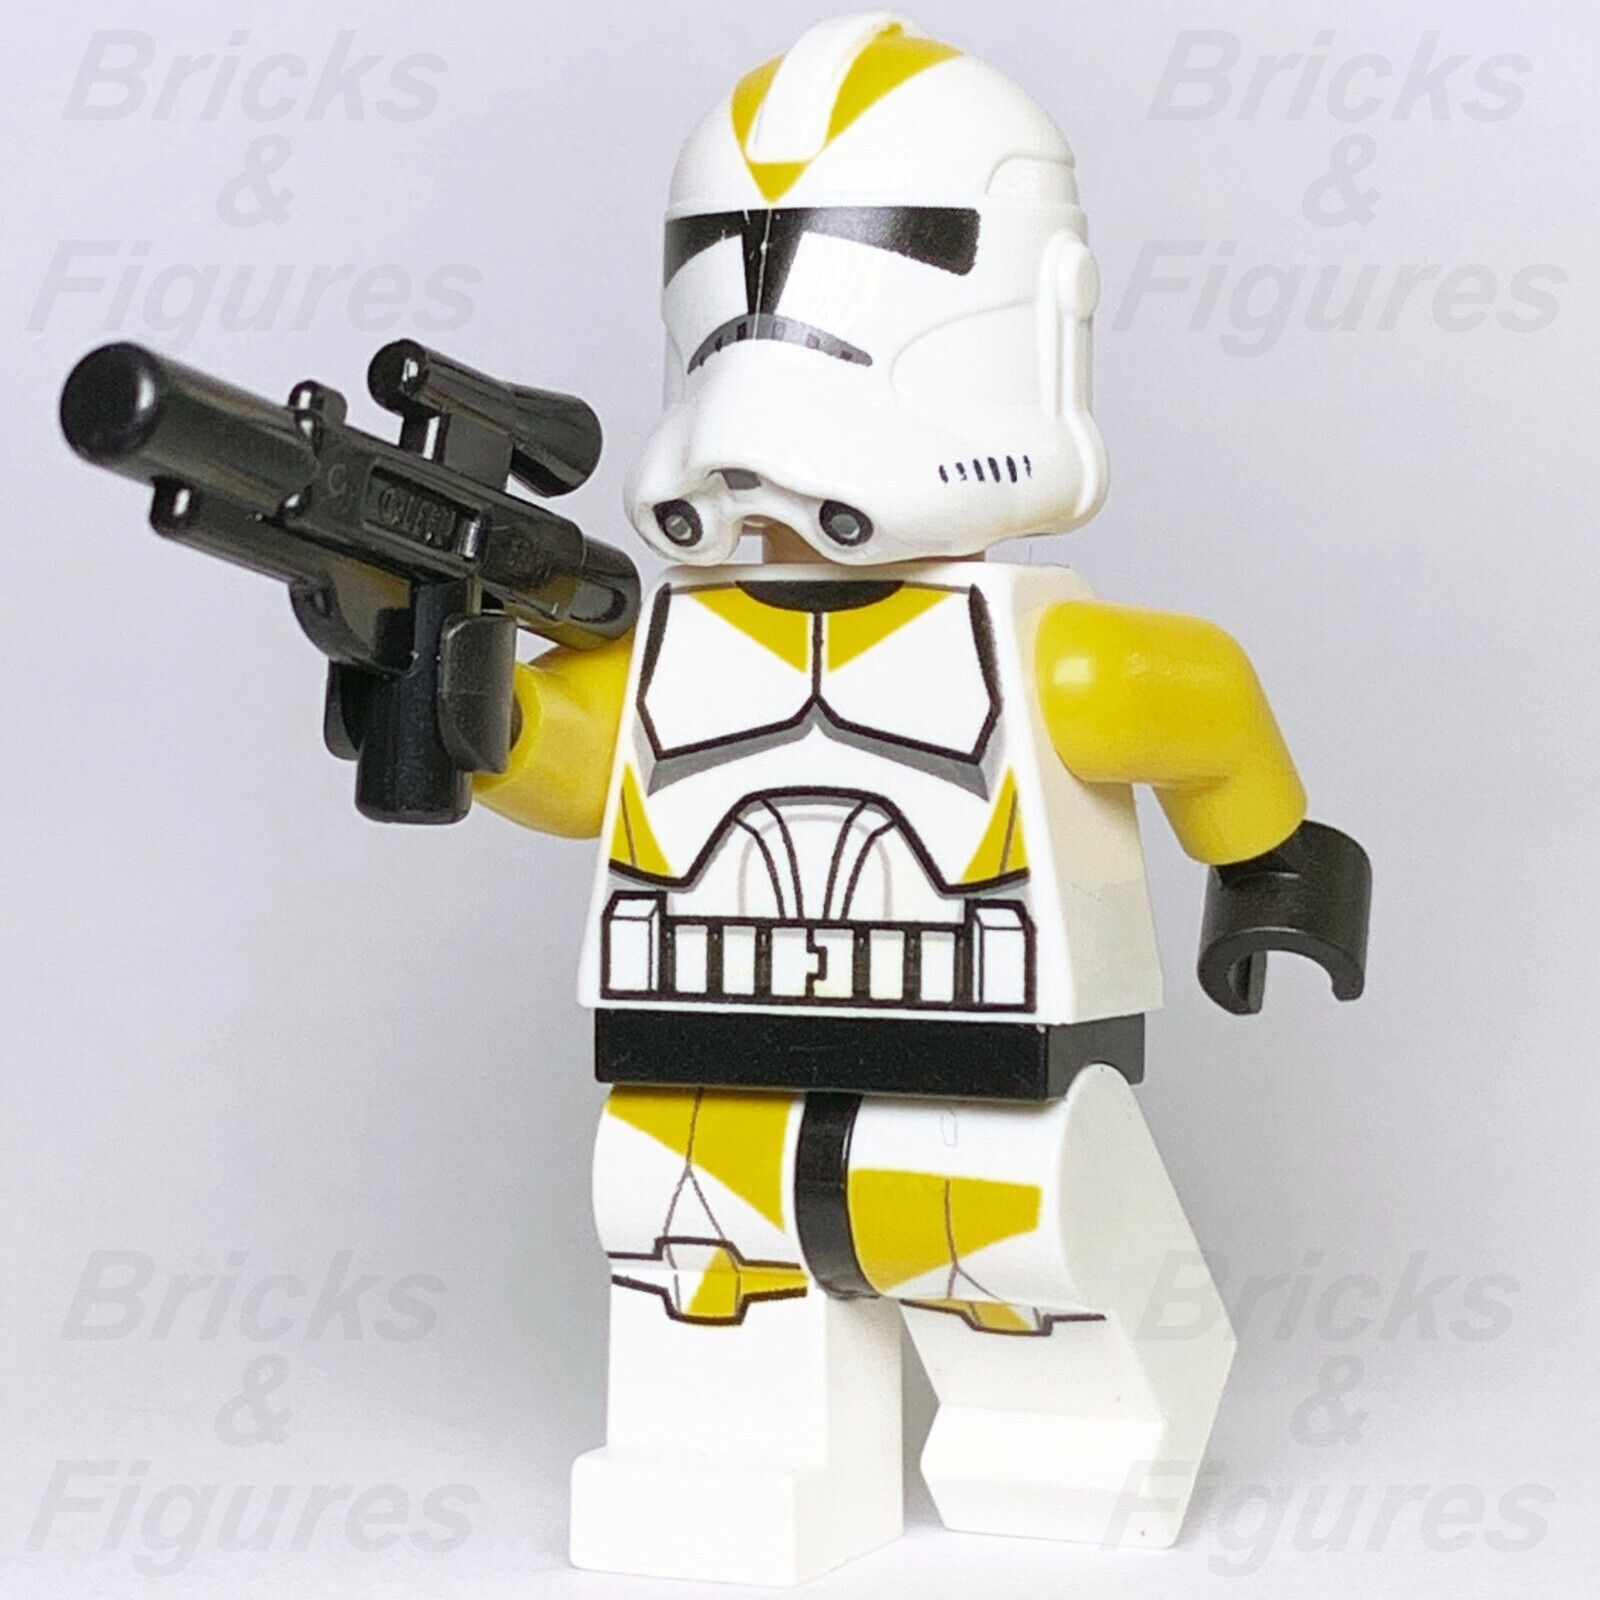 LEGO Star Wars Clone Trooper Minifigure 212th Attack Battalion Phase 2 75013 - Bricks & Figures